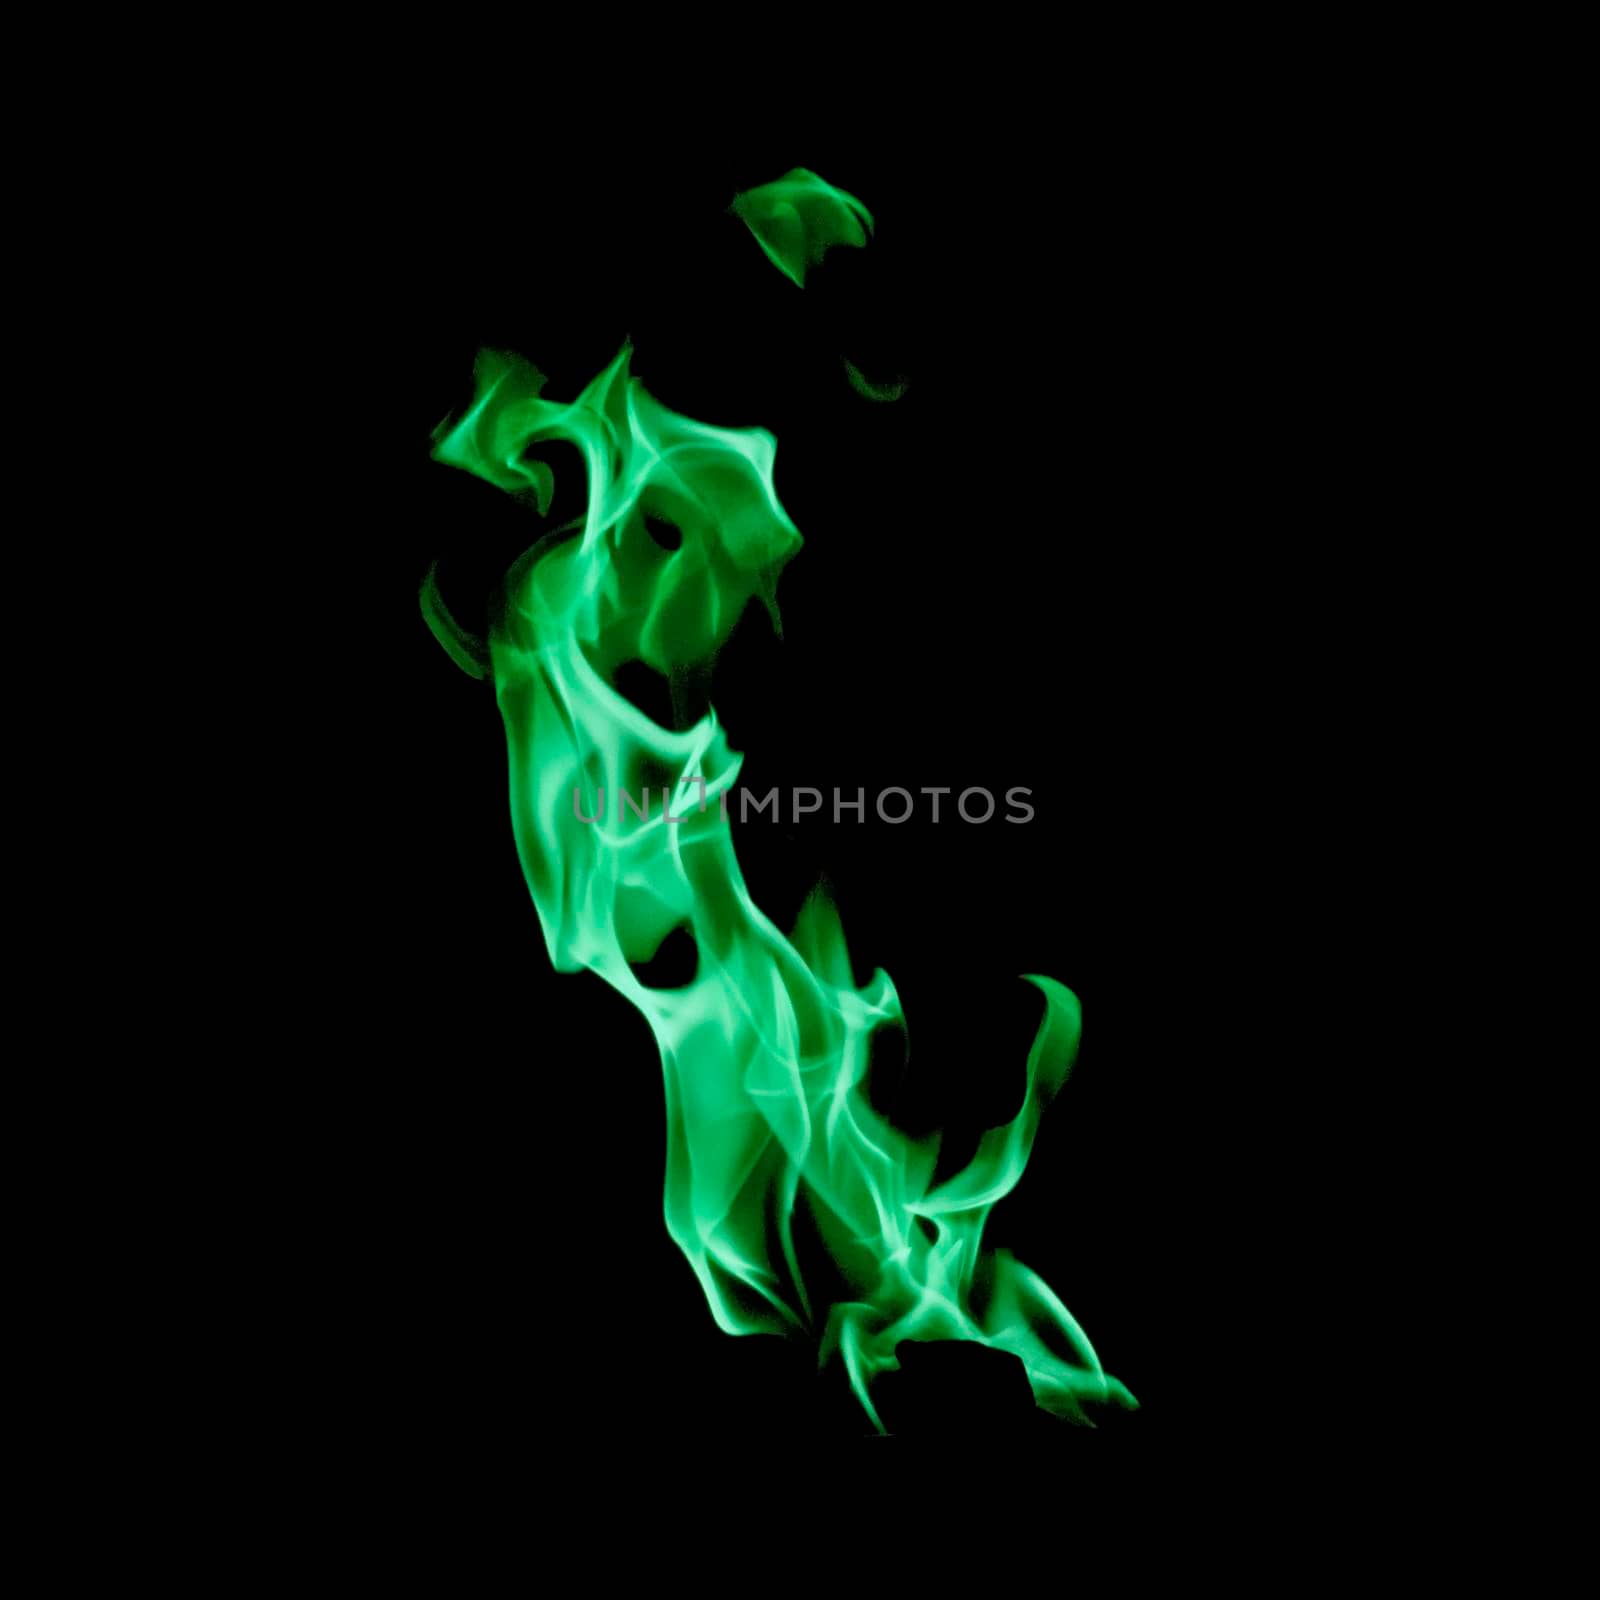 small blaze green fire. High quality photo by Zahard